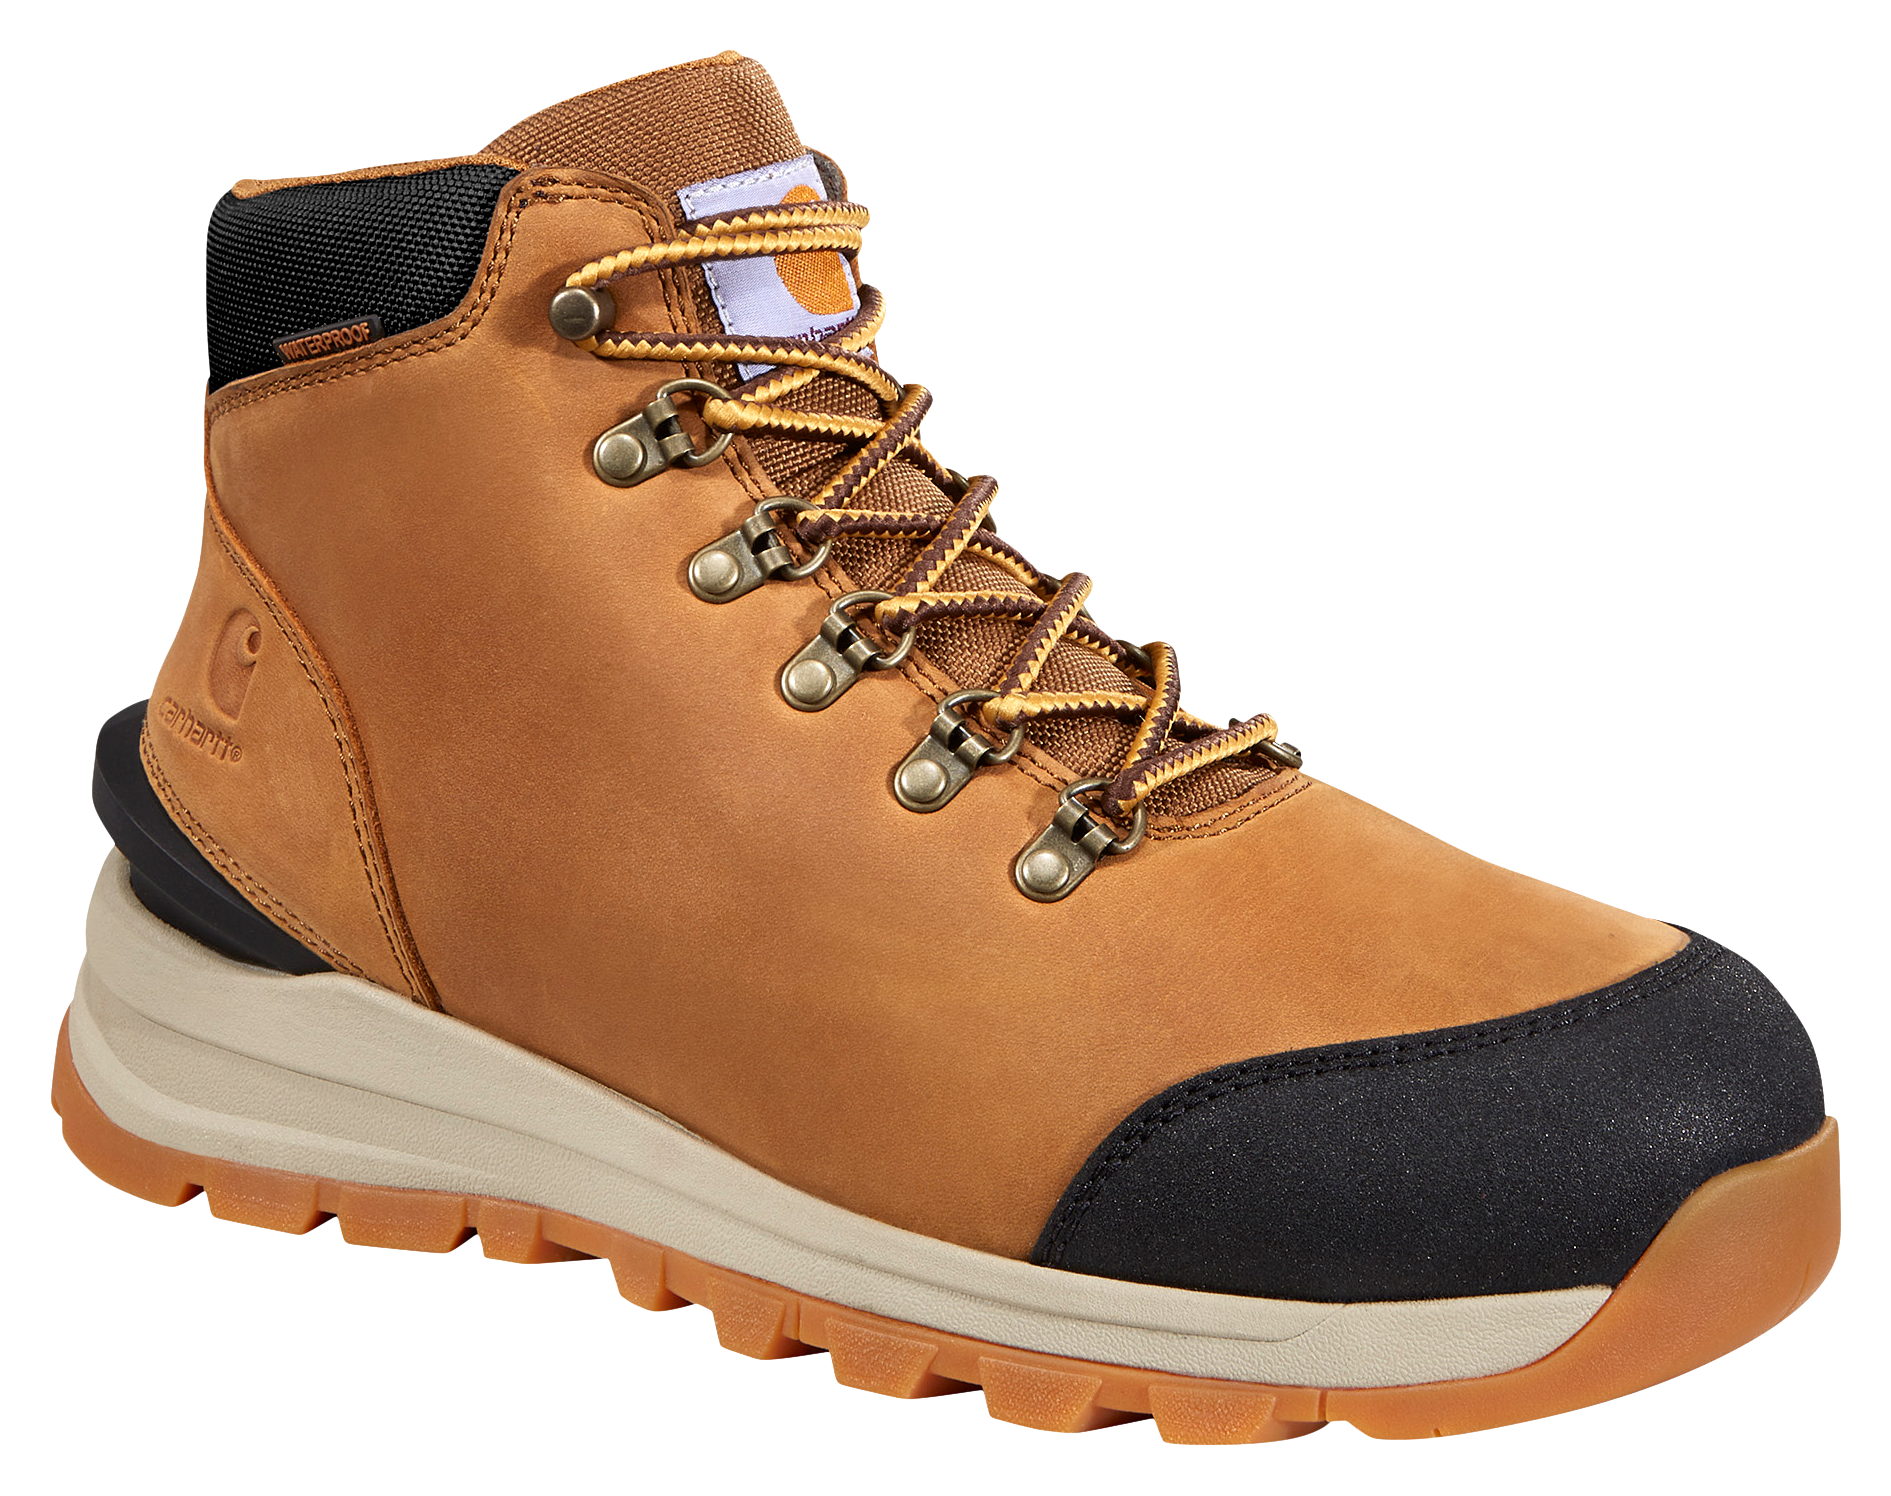 Carhartt Gilmore Waterproof Hiking Boots for Men - Brown - 11.5W